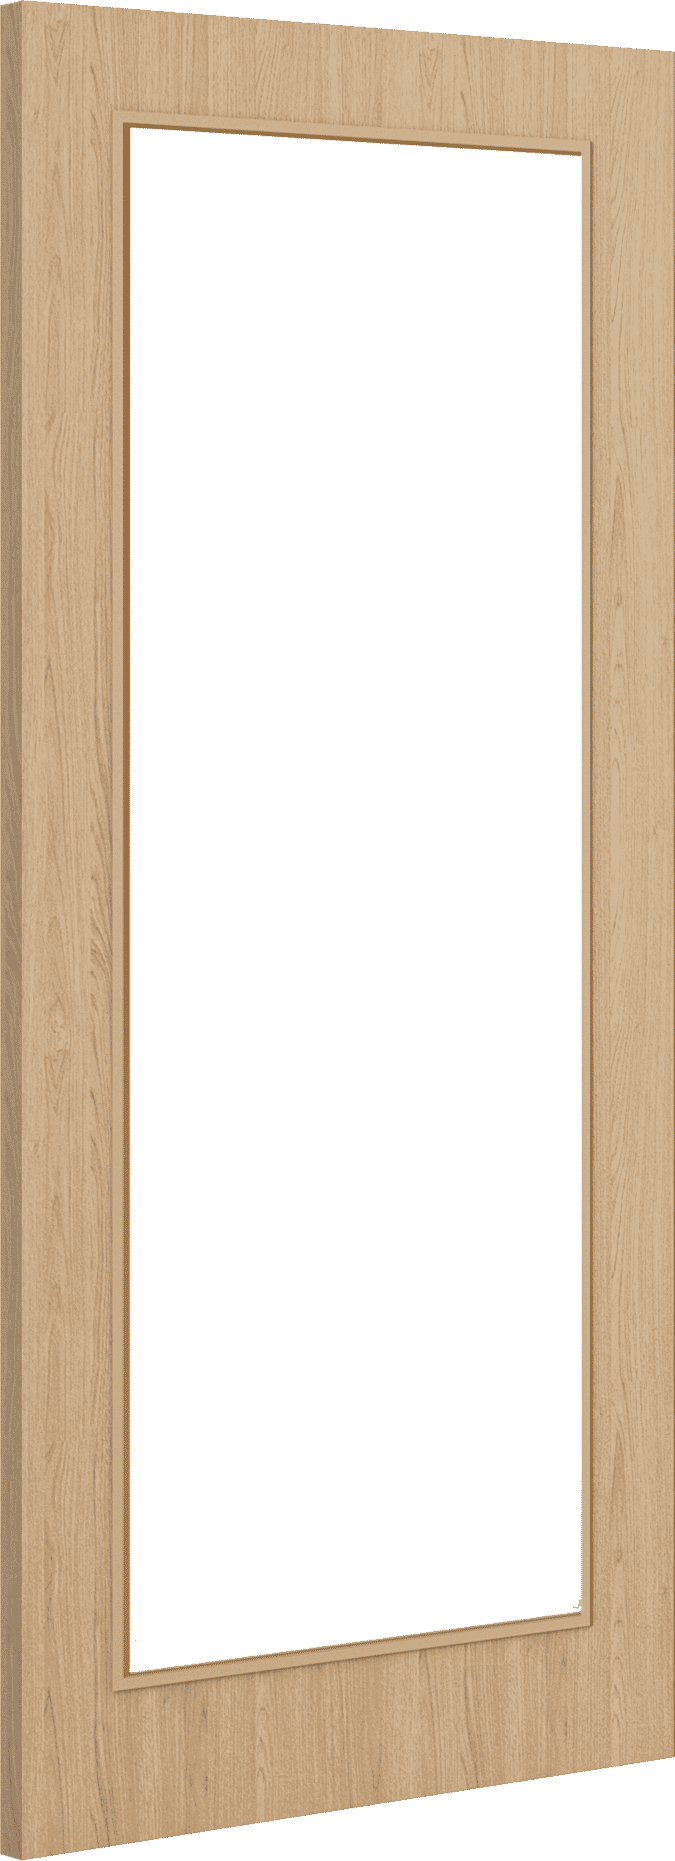 2040mm x 926mm x 44mm Architectural Oak 05 Frosted Glazed - Prefinished FD30 Fire Door Blank